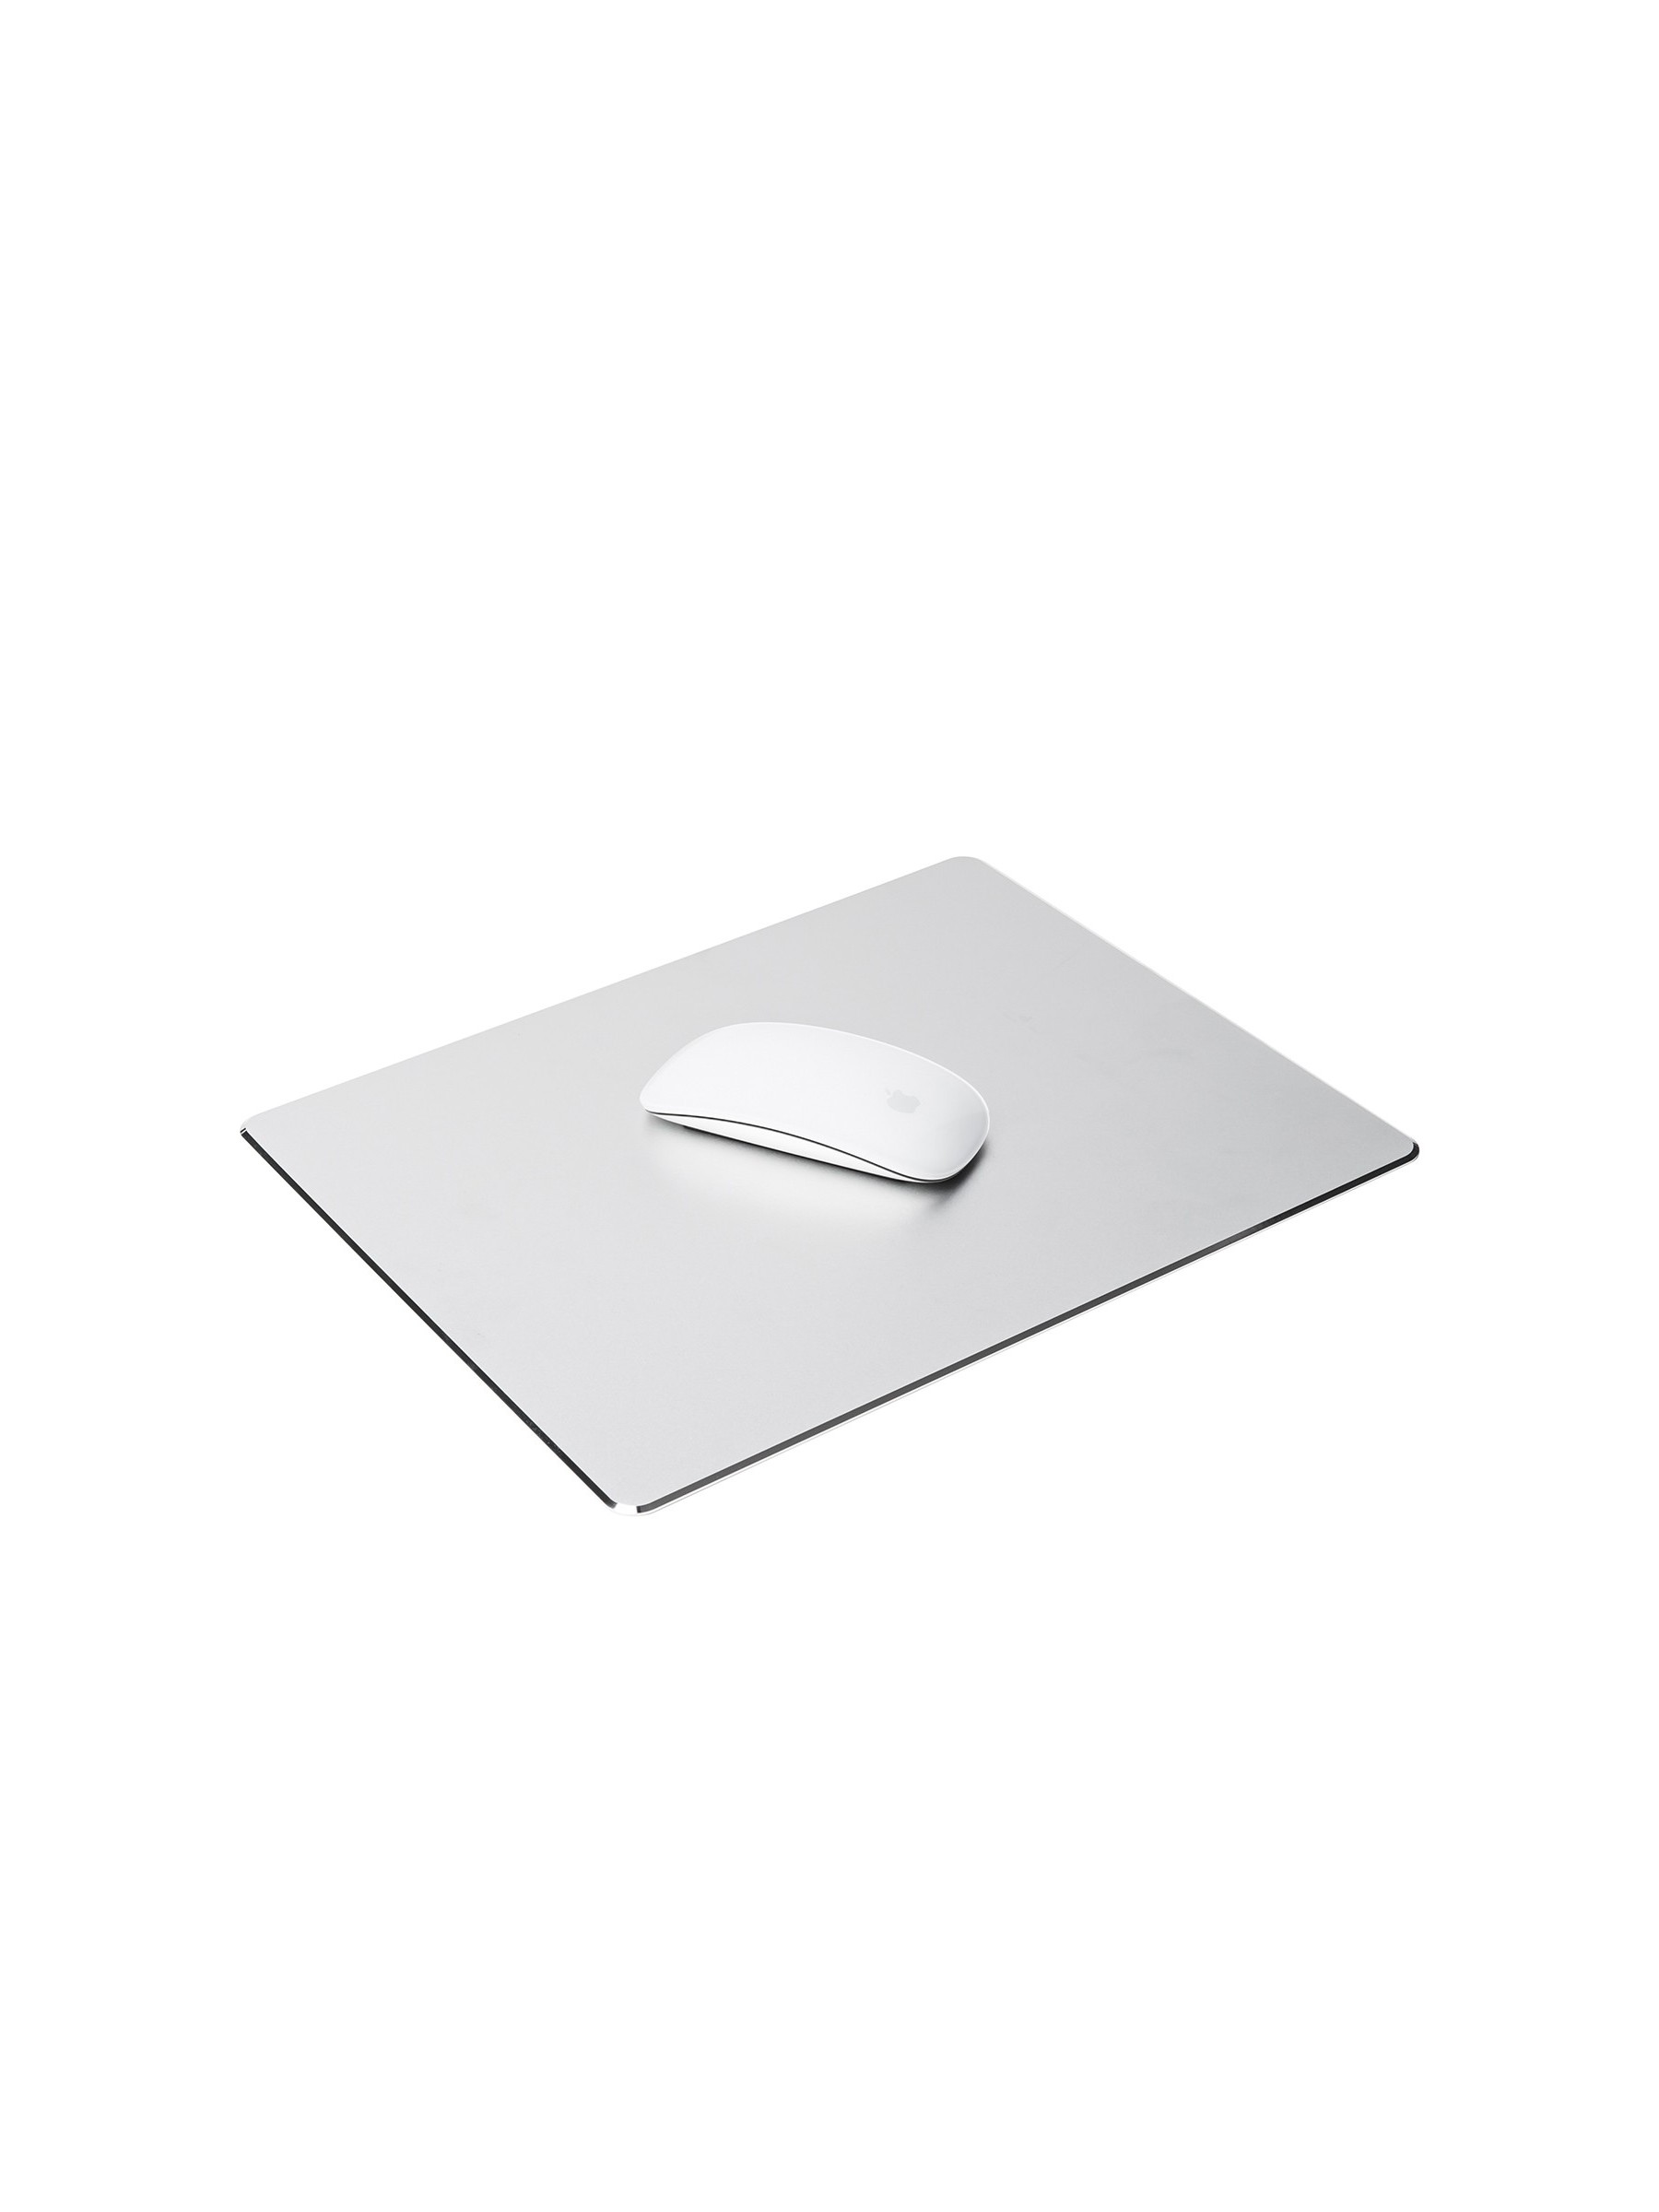 DELOCK 12044: Tapis de souris, 900 x 500 x 2 mm, blanc chez